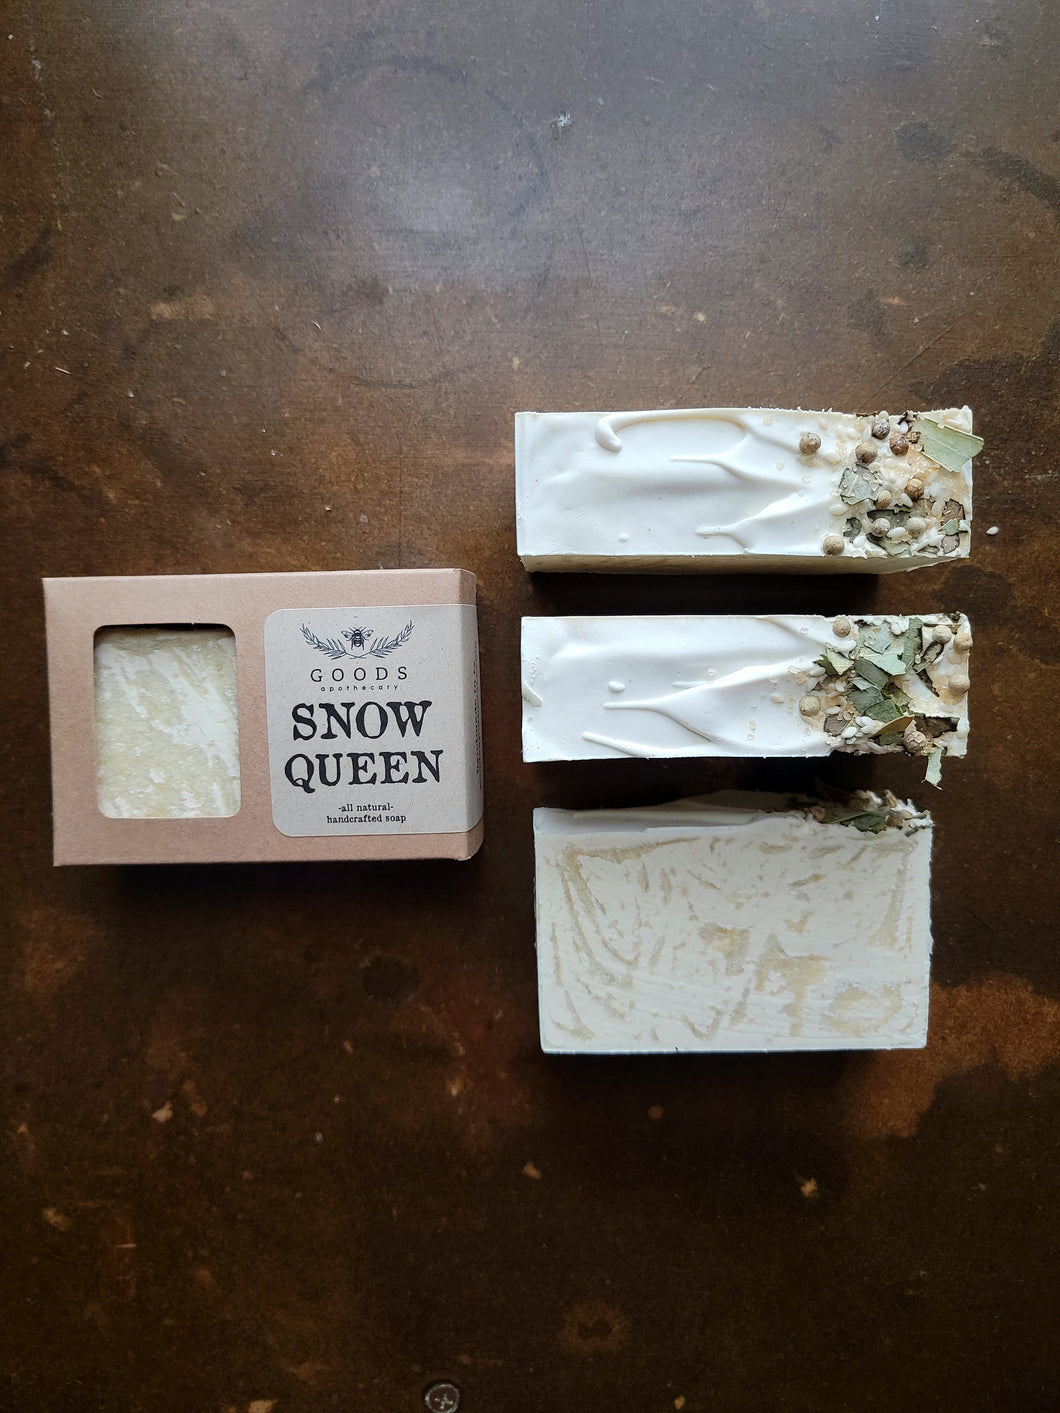 Snow Queen Handcrafted Soap